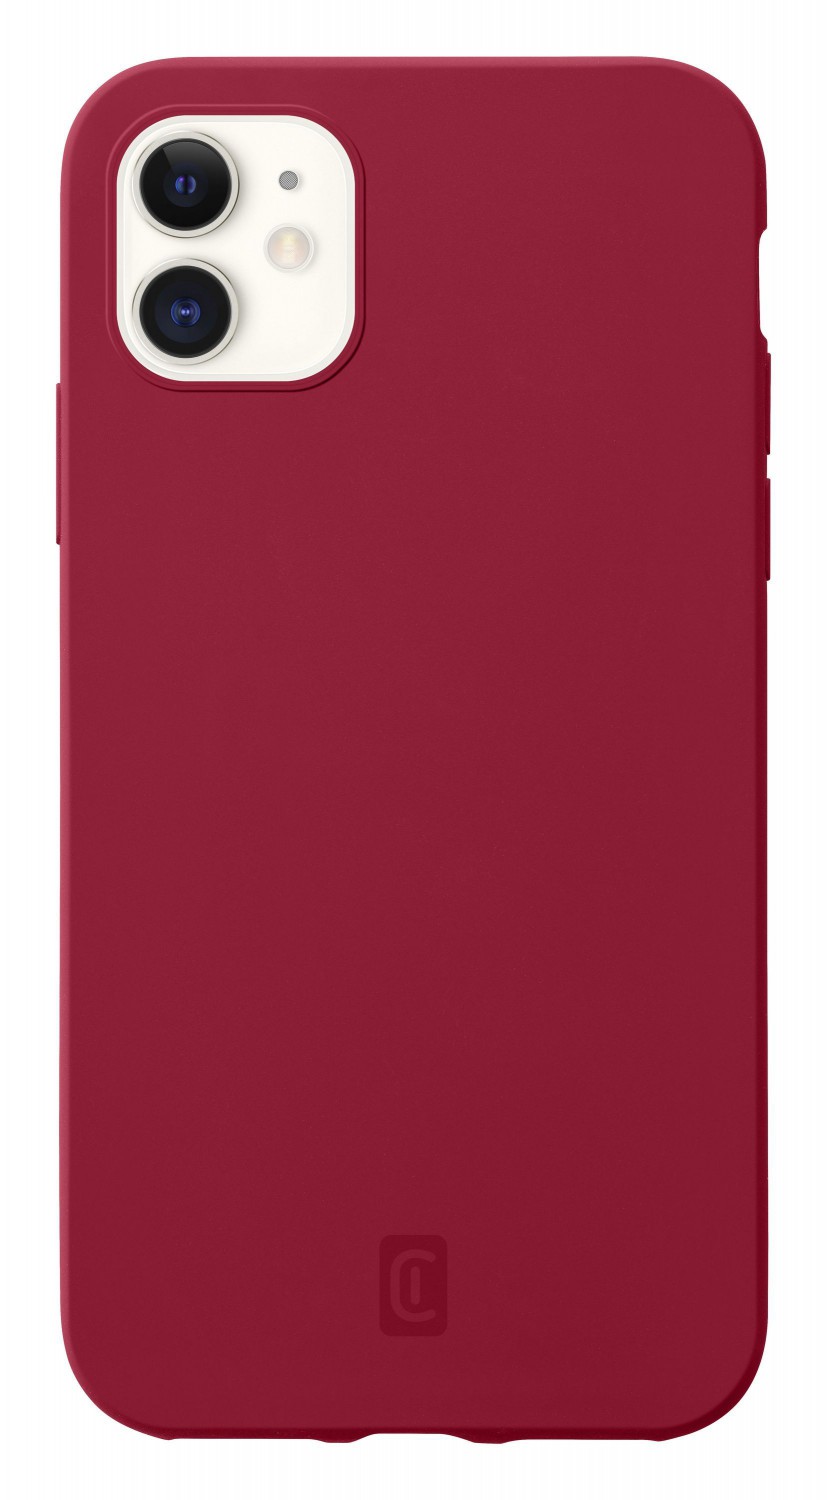 Cellularline Sensation silikonový kryt, pouzdro, obal Apple iPhone 12 mini red